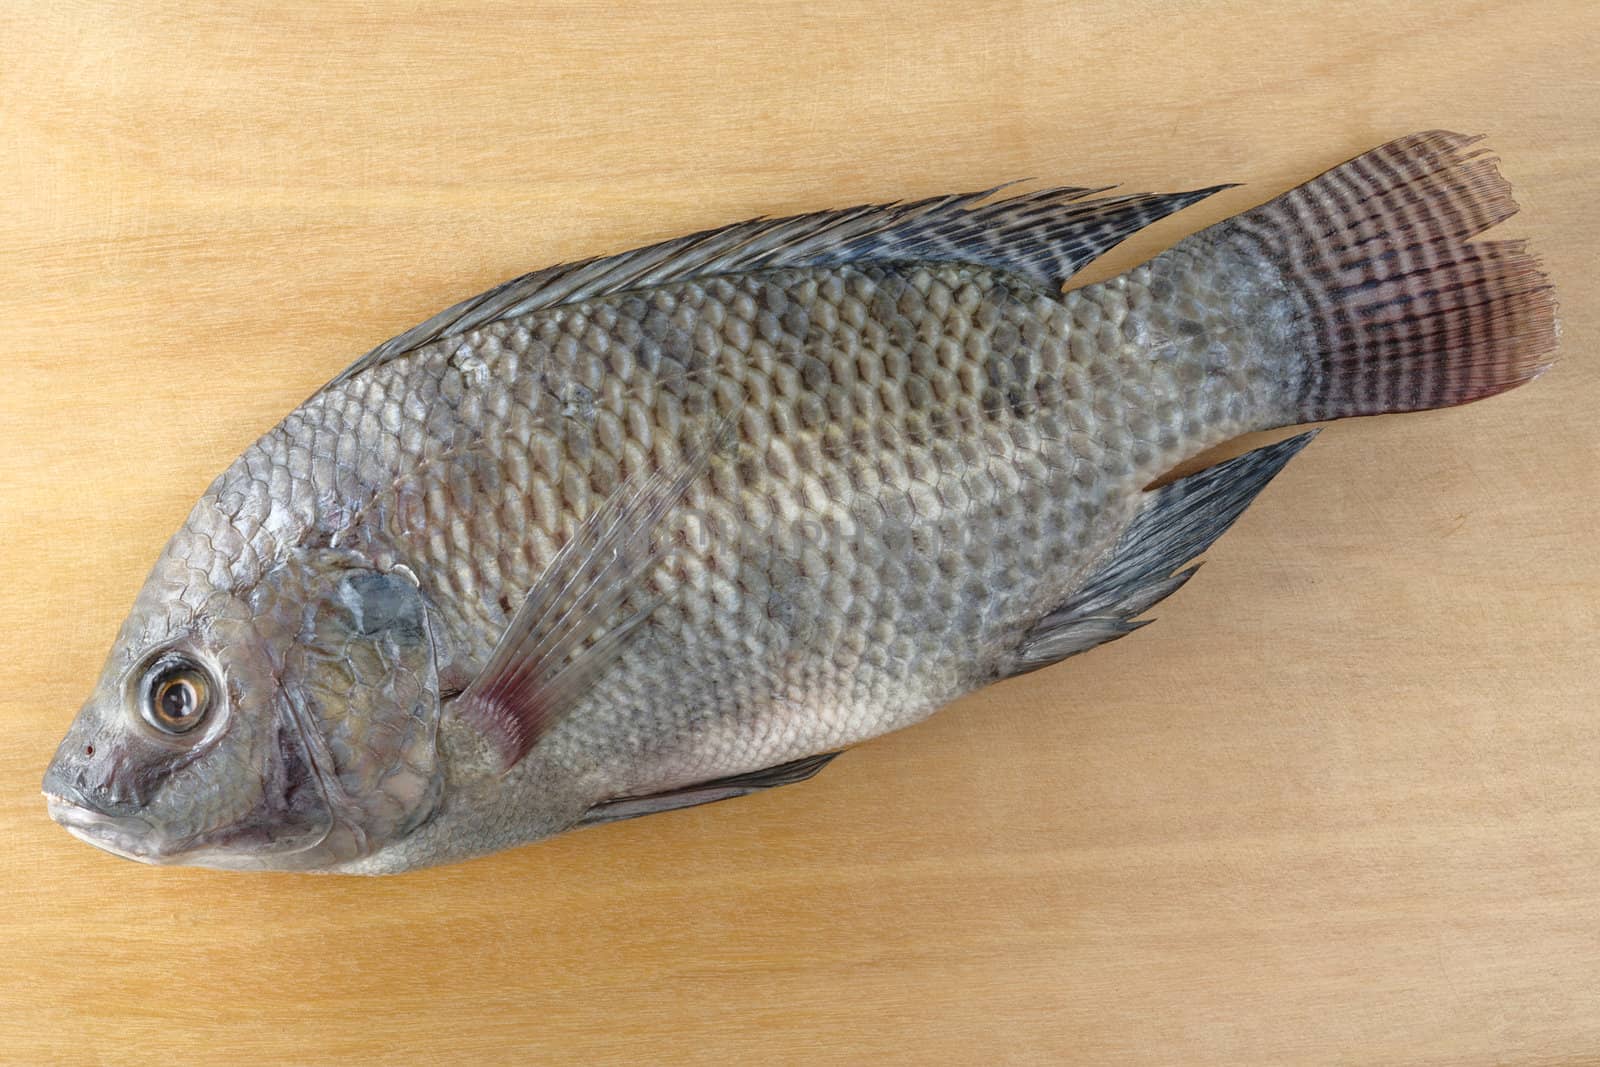 Fish Called Tilapia by ildi